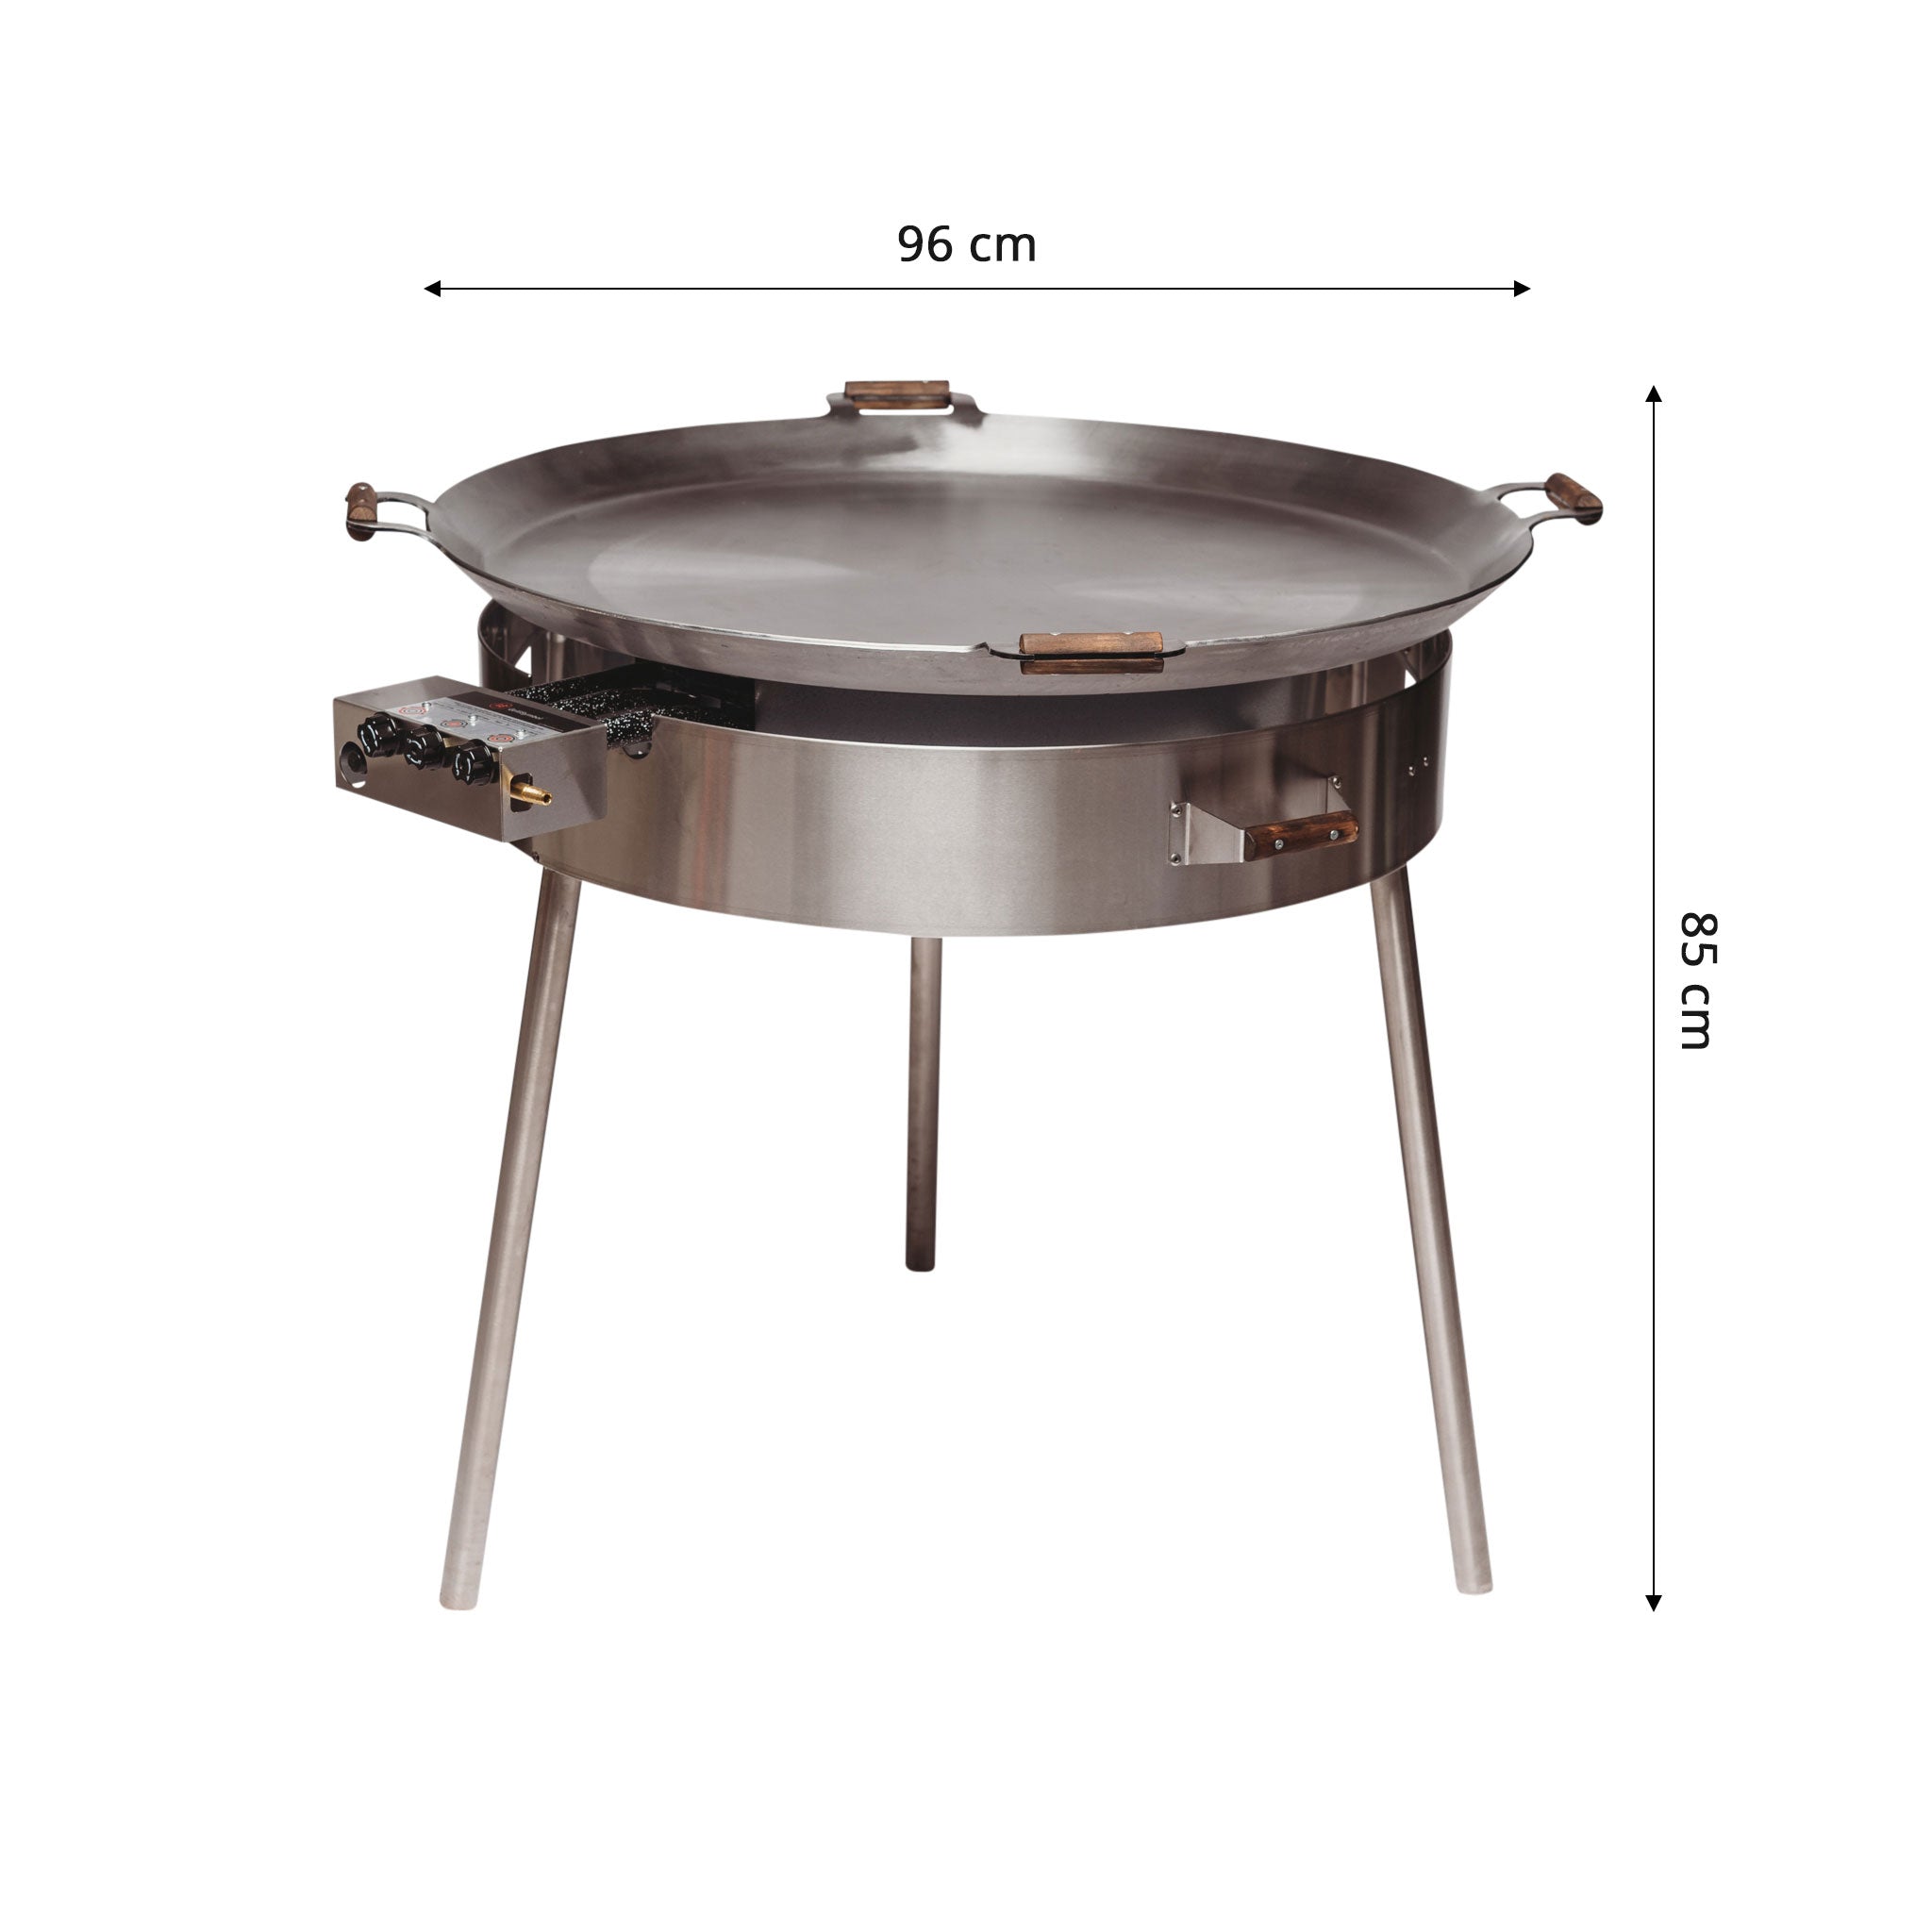 GrillSymbol Paella Cooking Set PRO-960 light, ø 96 cm
(pan 3 mm steel ø 96 cm, gas burner ø 60 cm)